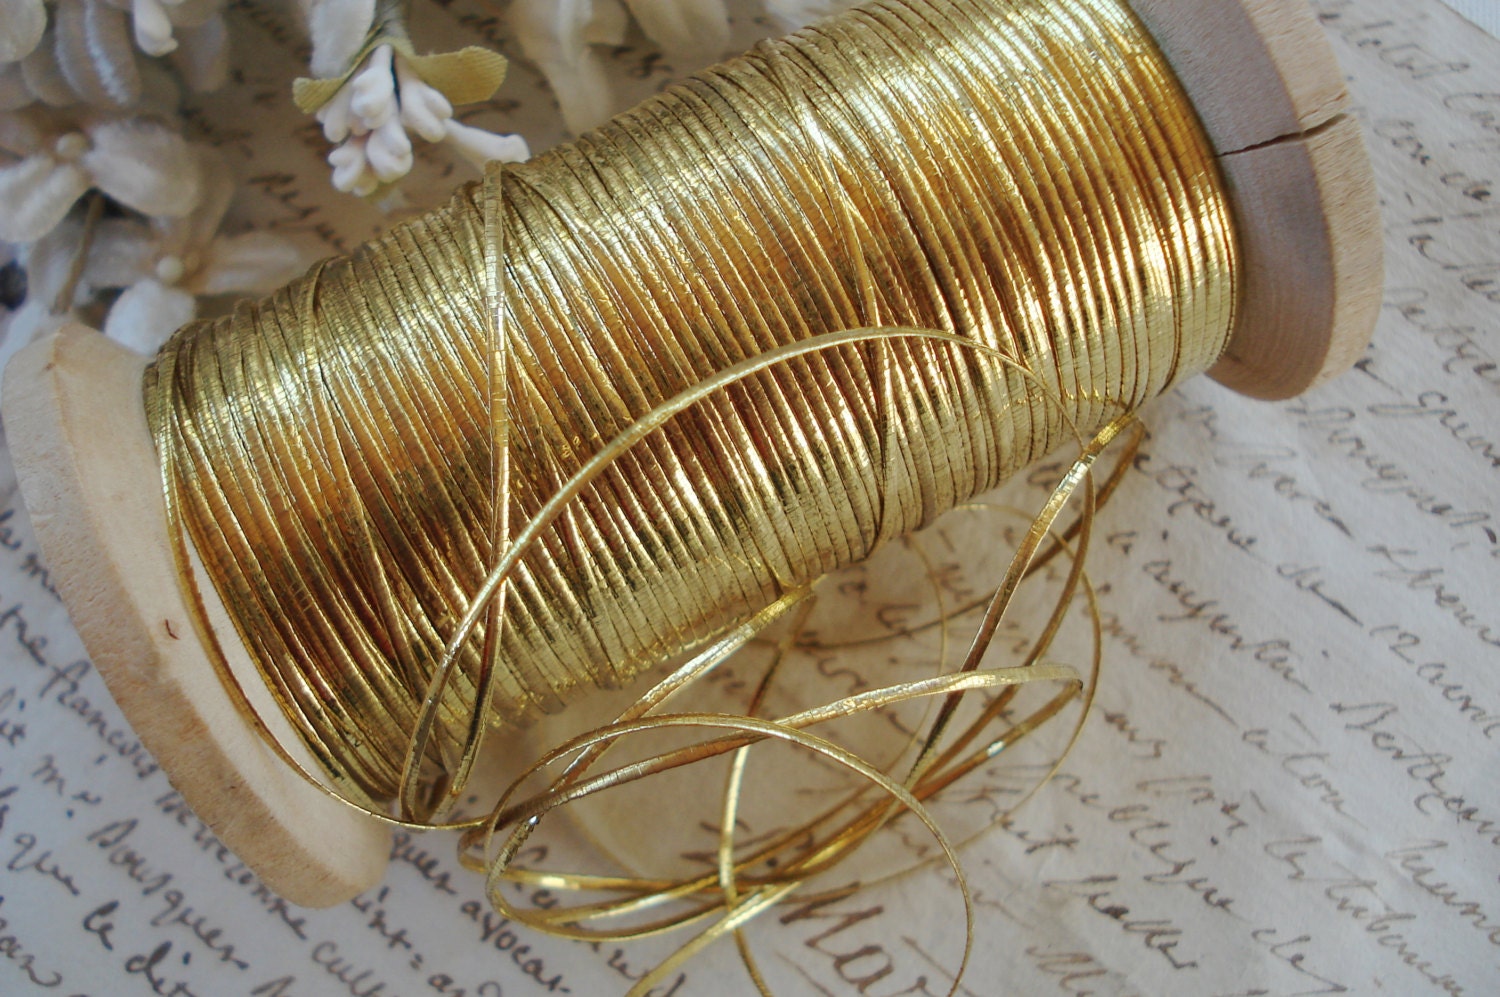 Janome Metallic Thread M003 GOLD Embroidery 200901109